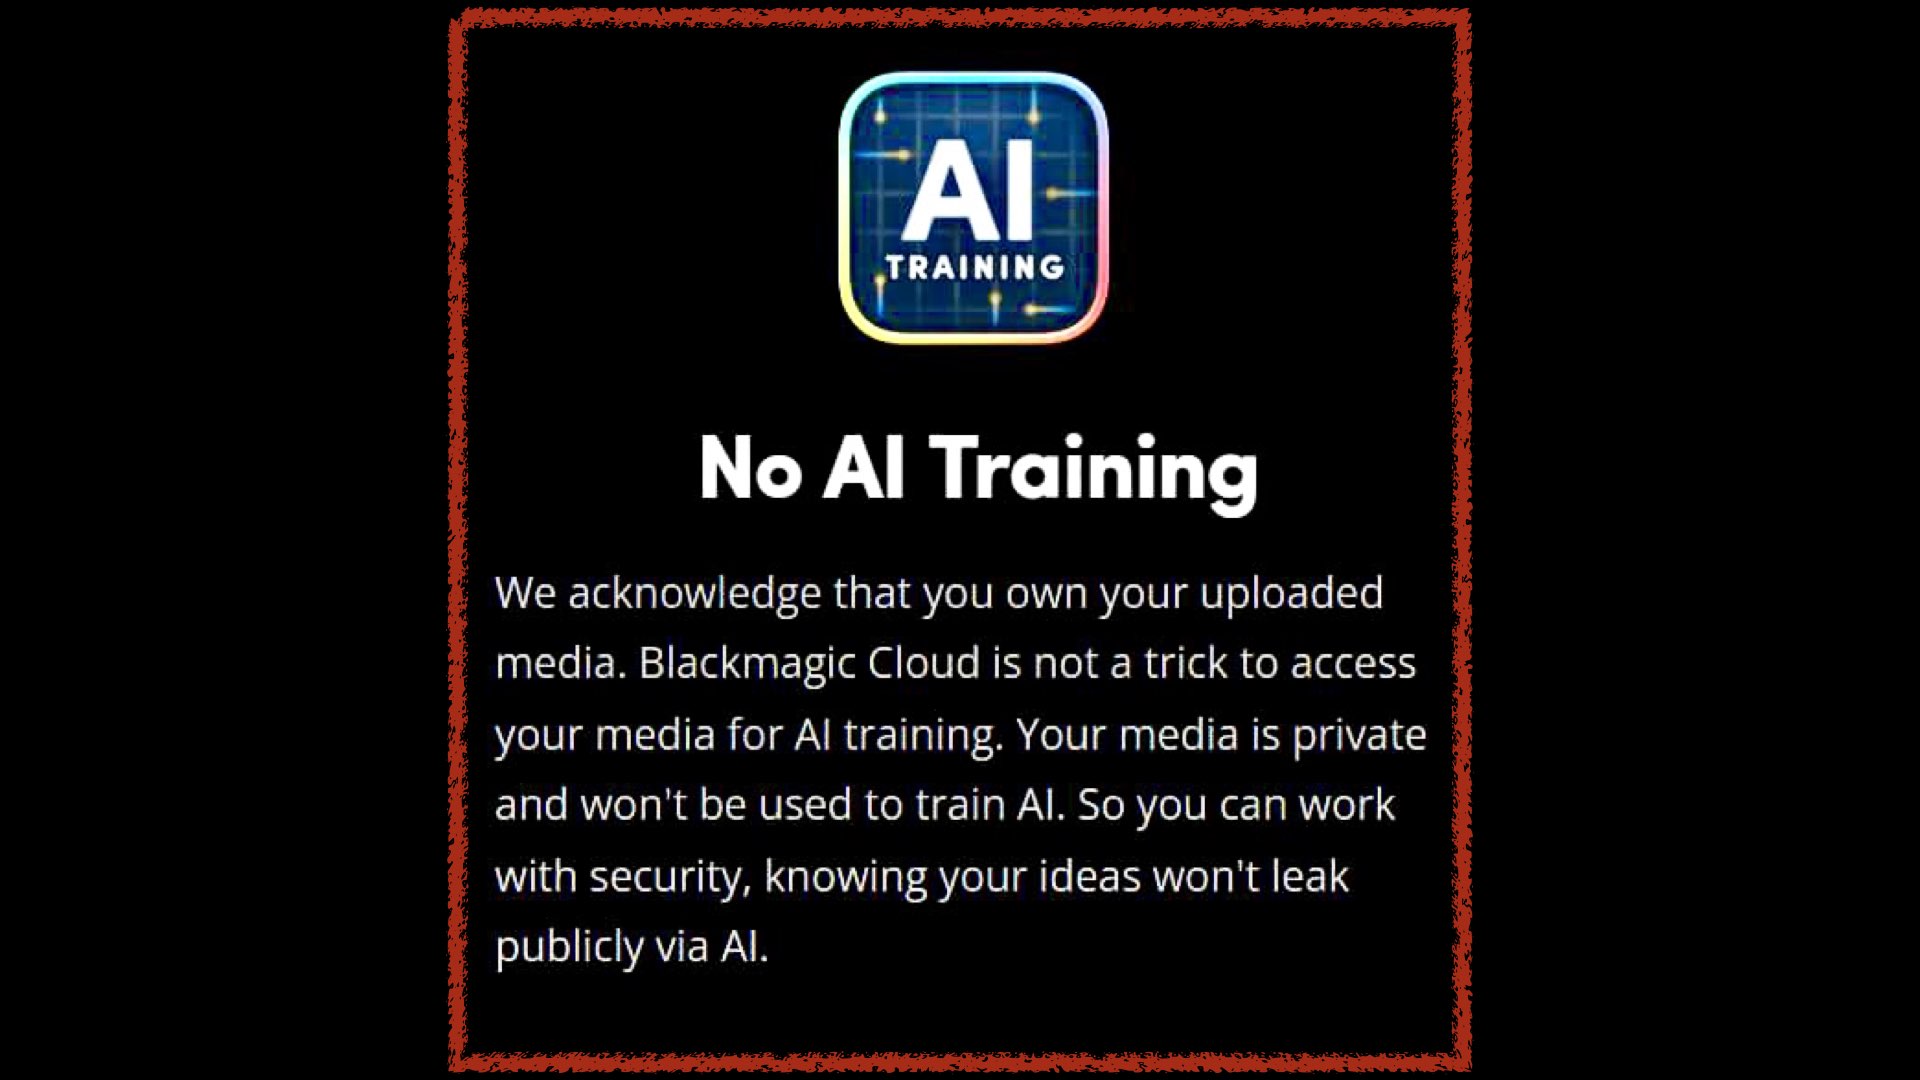 Blackmagic Smashes Adobe With ‘No AI Training’ Statement